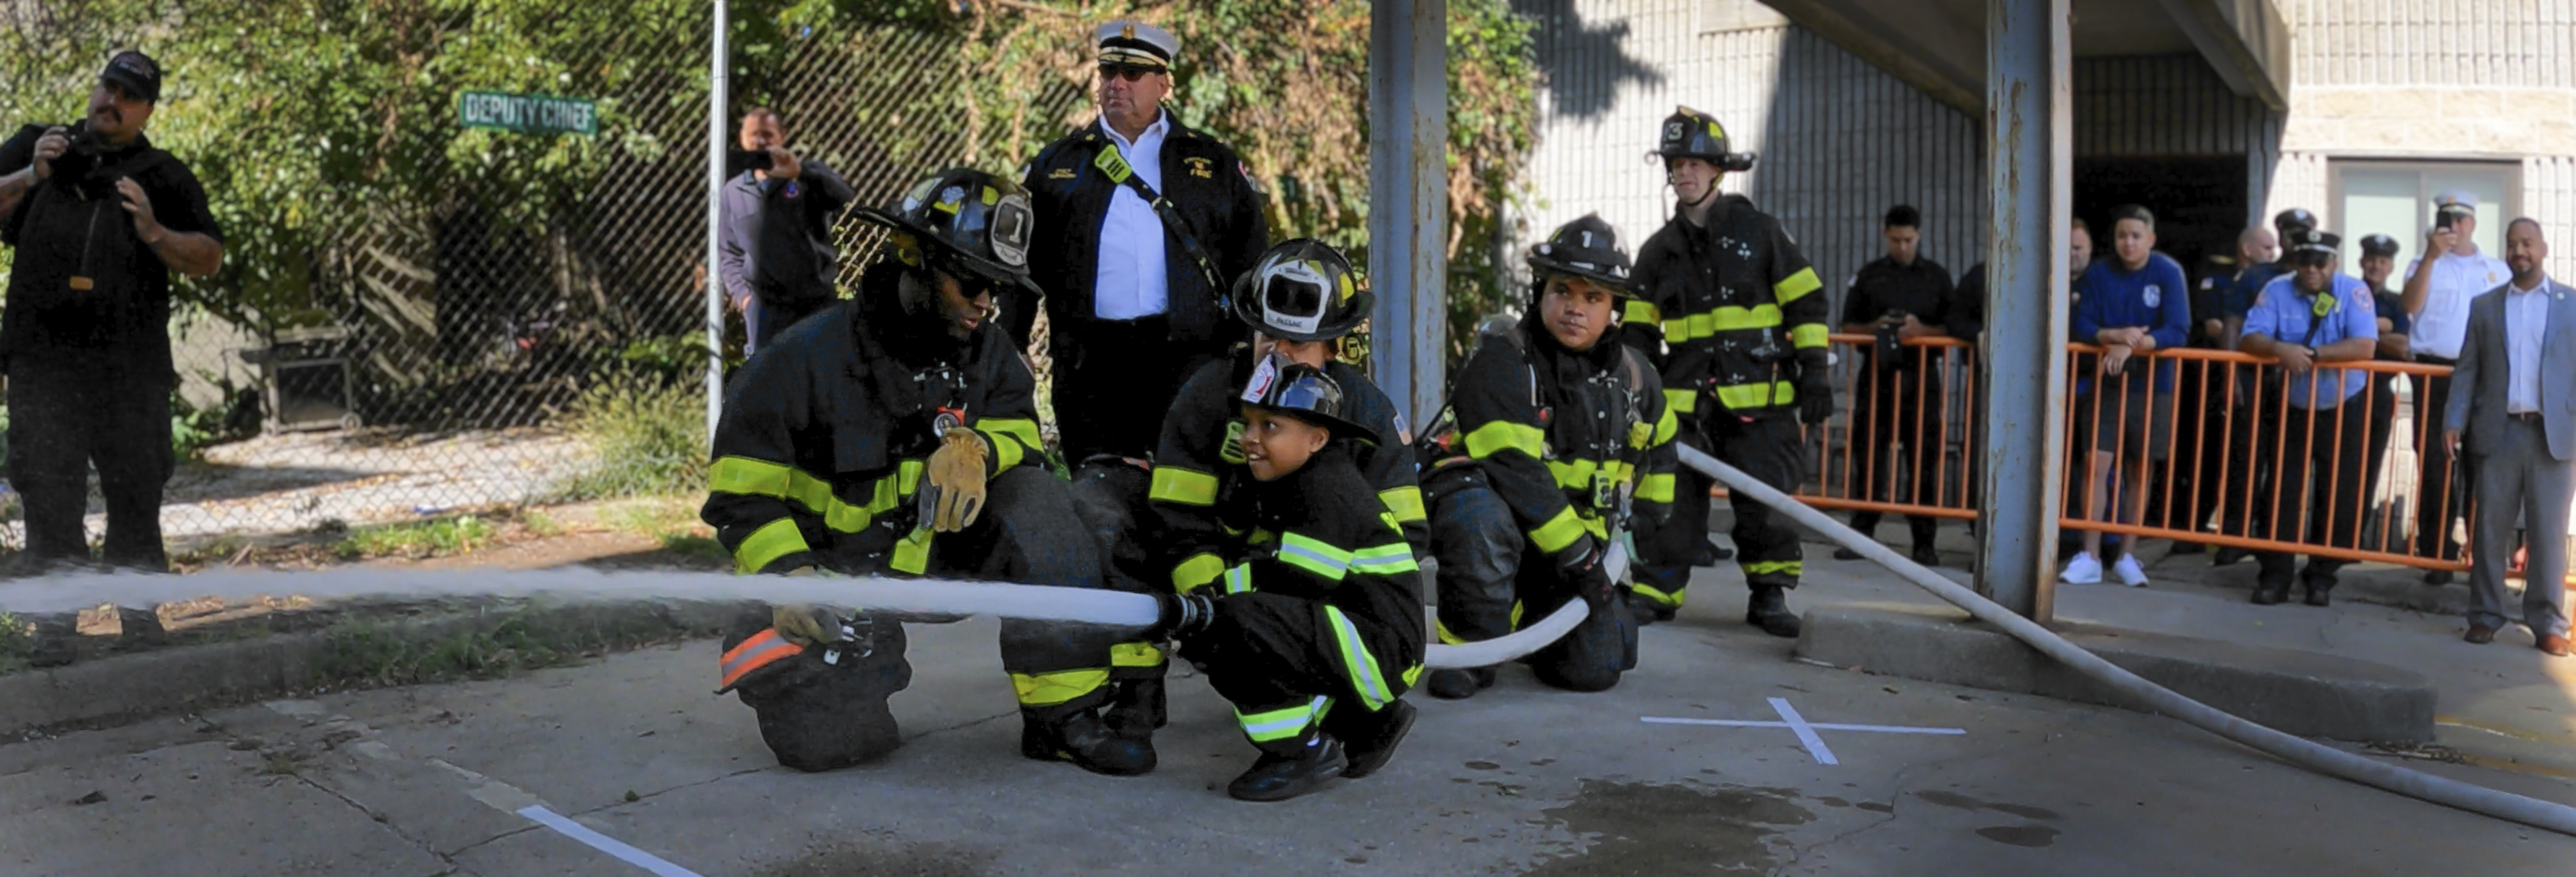 Boy battling illness becomes honorary firefighter - nj.com